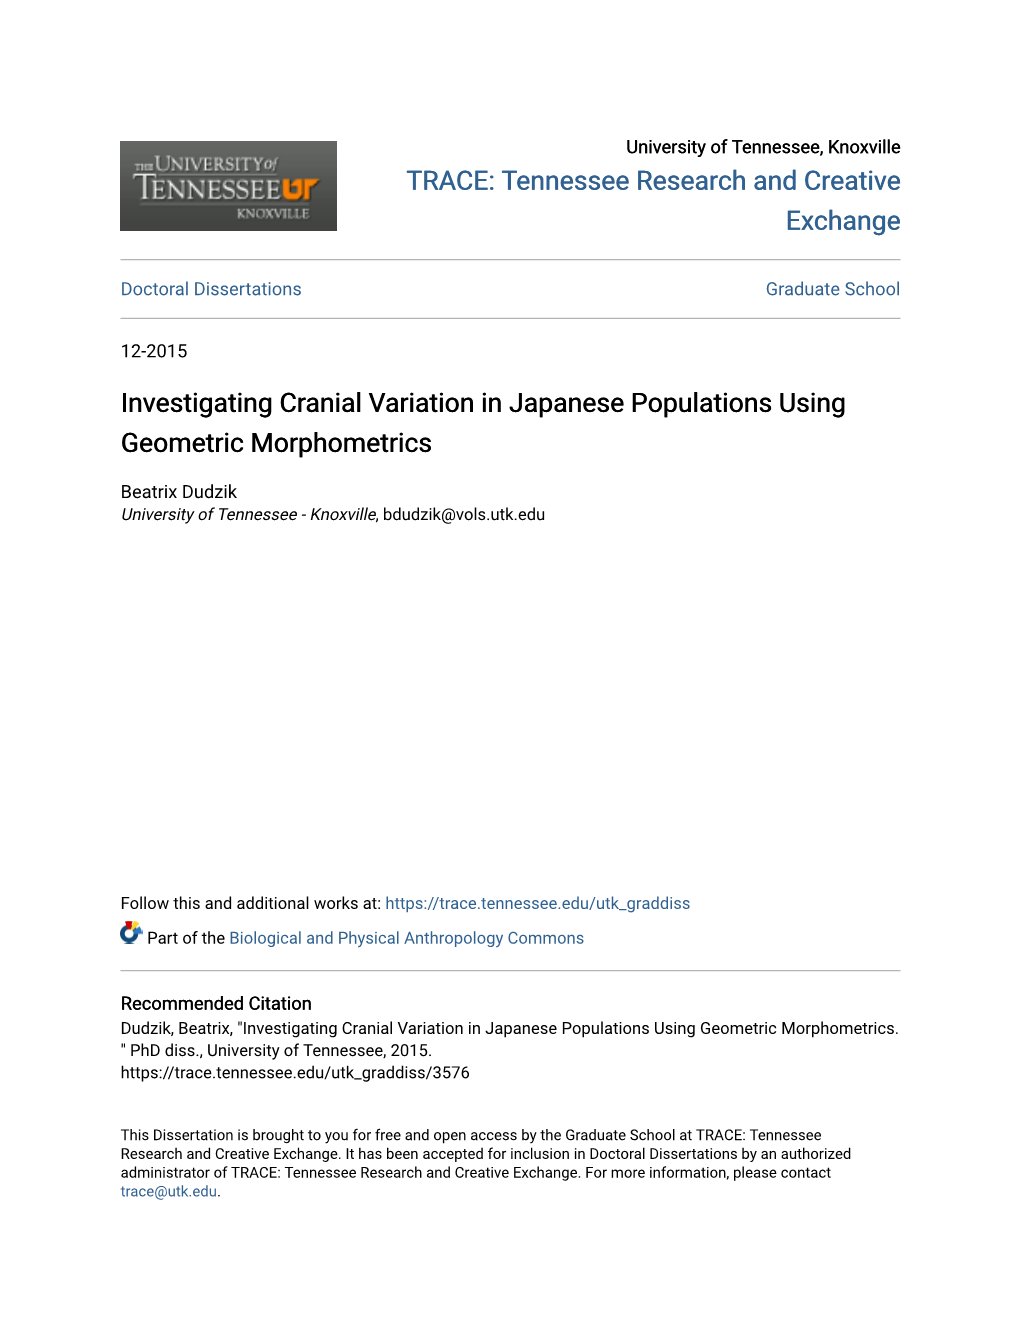 Investigating Cranial Variation in Japanese Populations Using Geometric Morphometrics